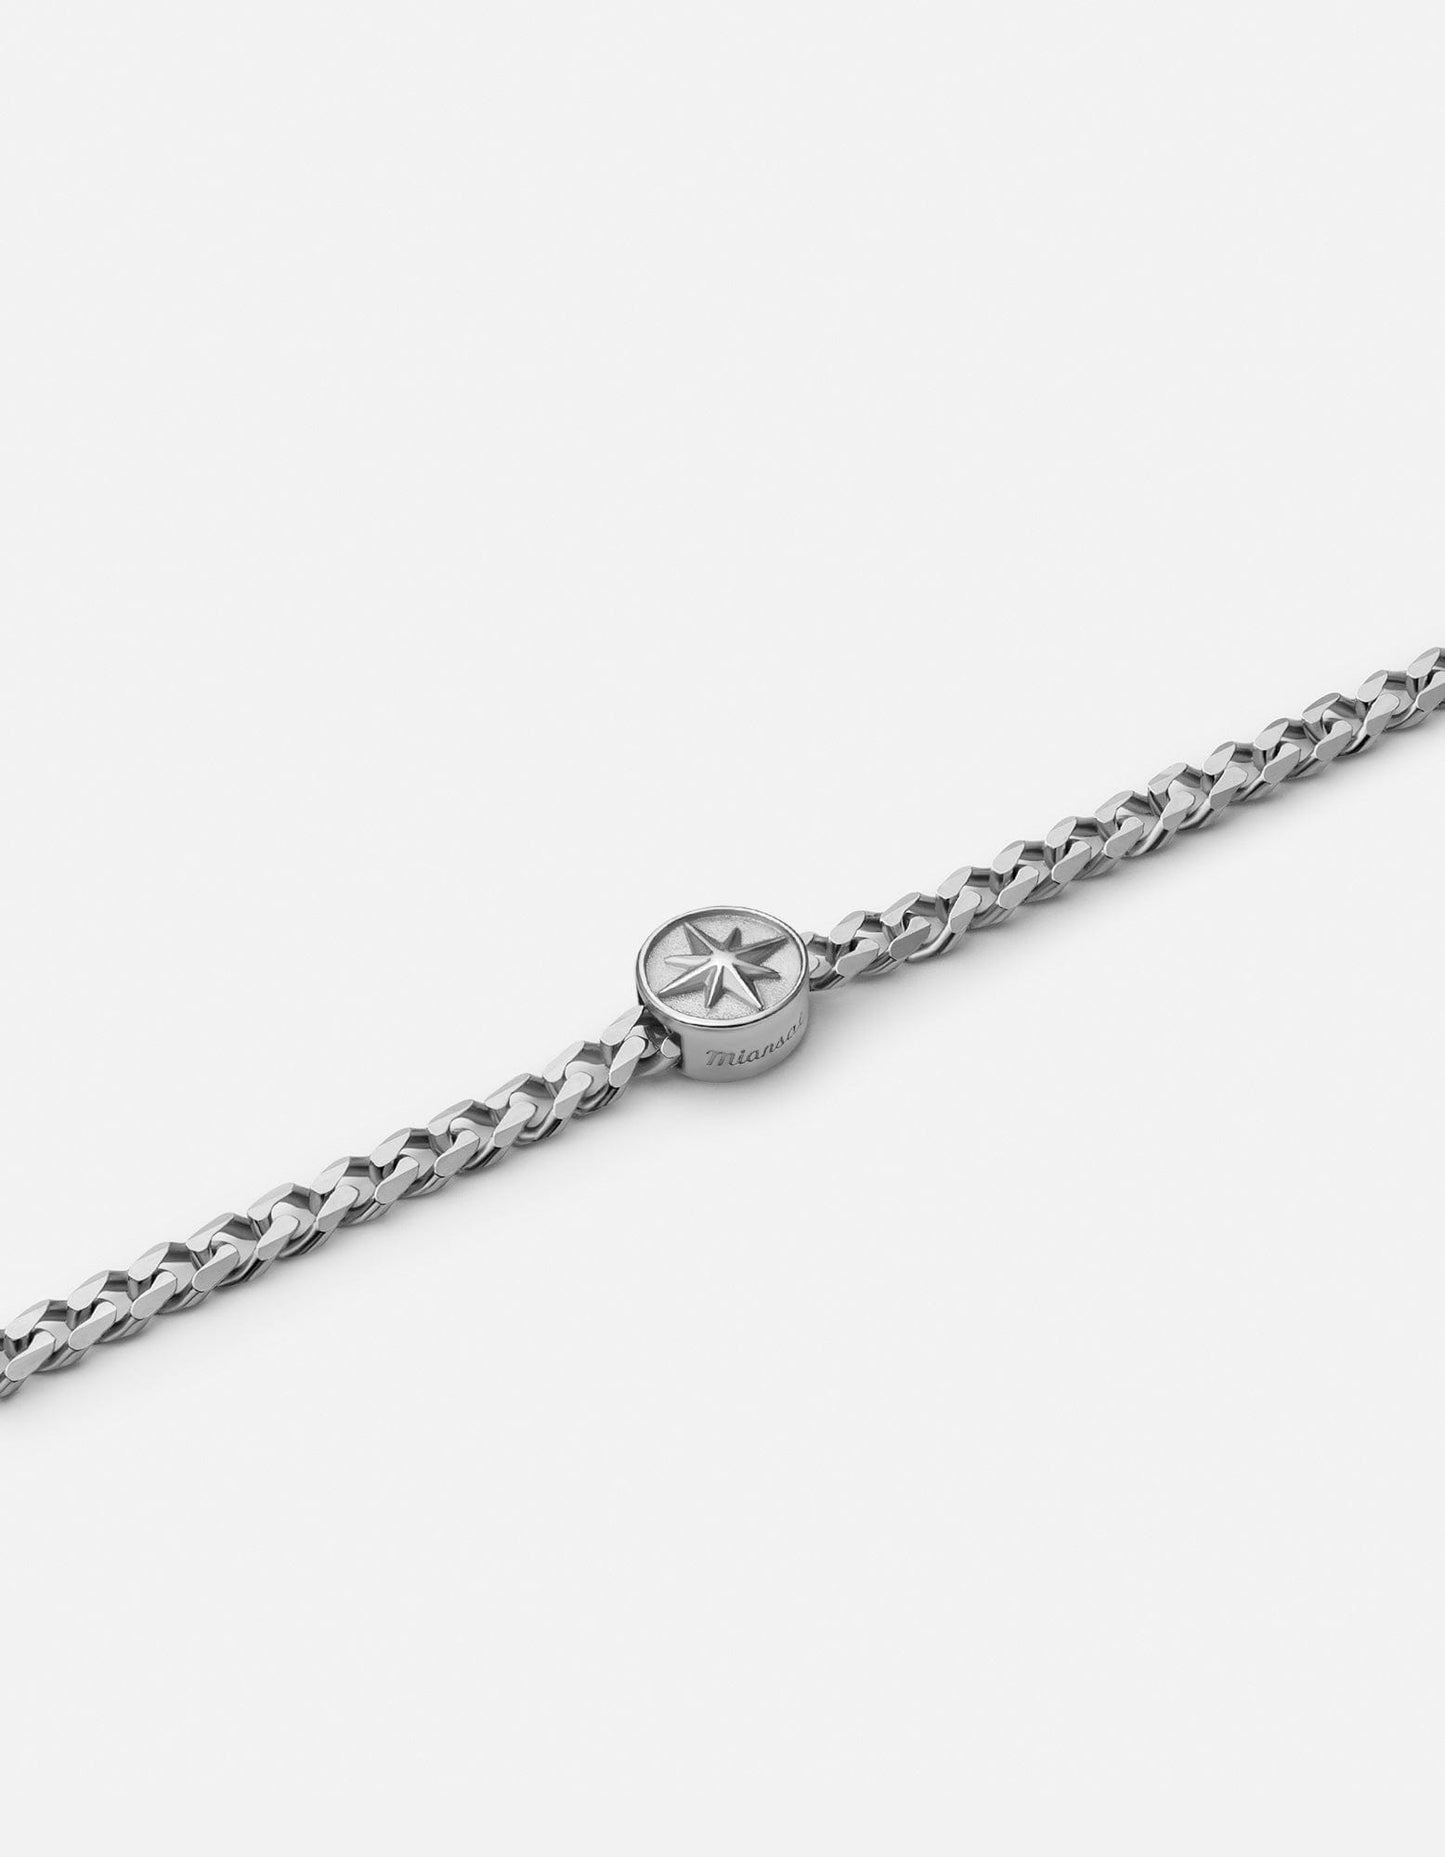 North Star Chain Bracelet, Sterling Silver